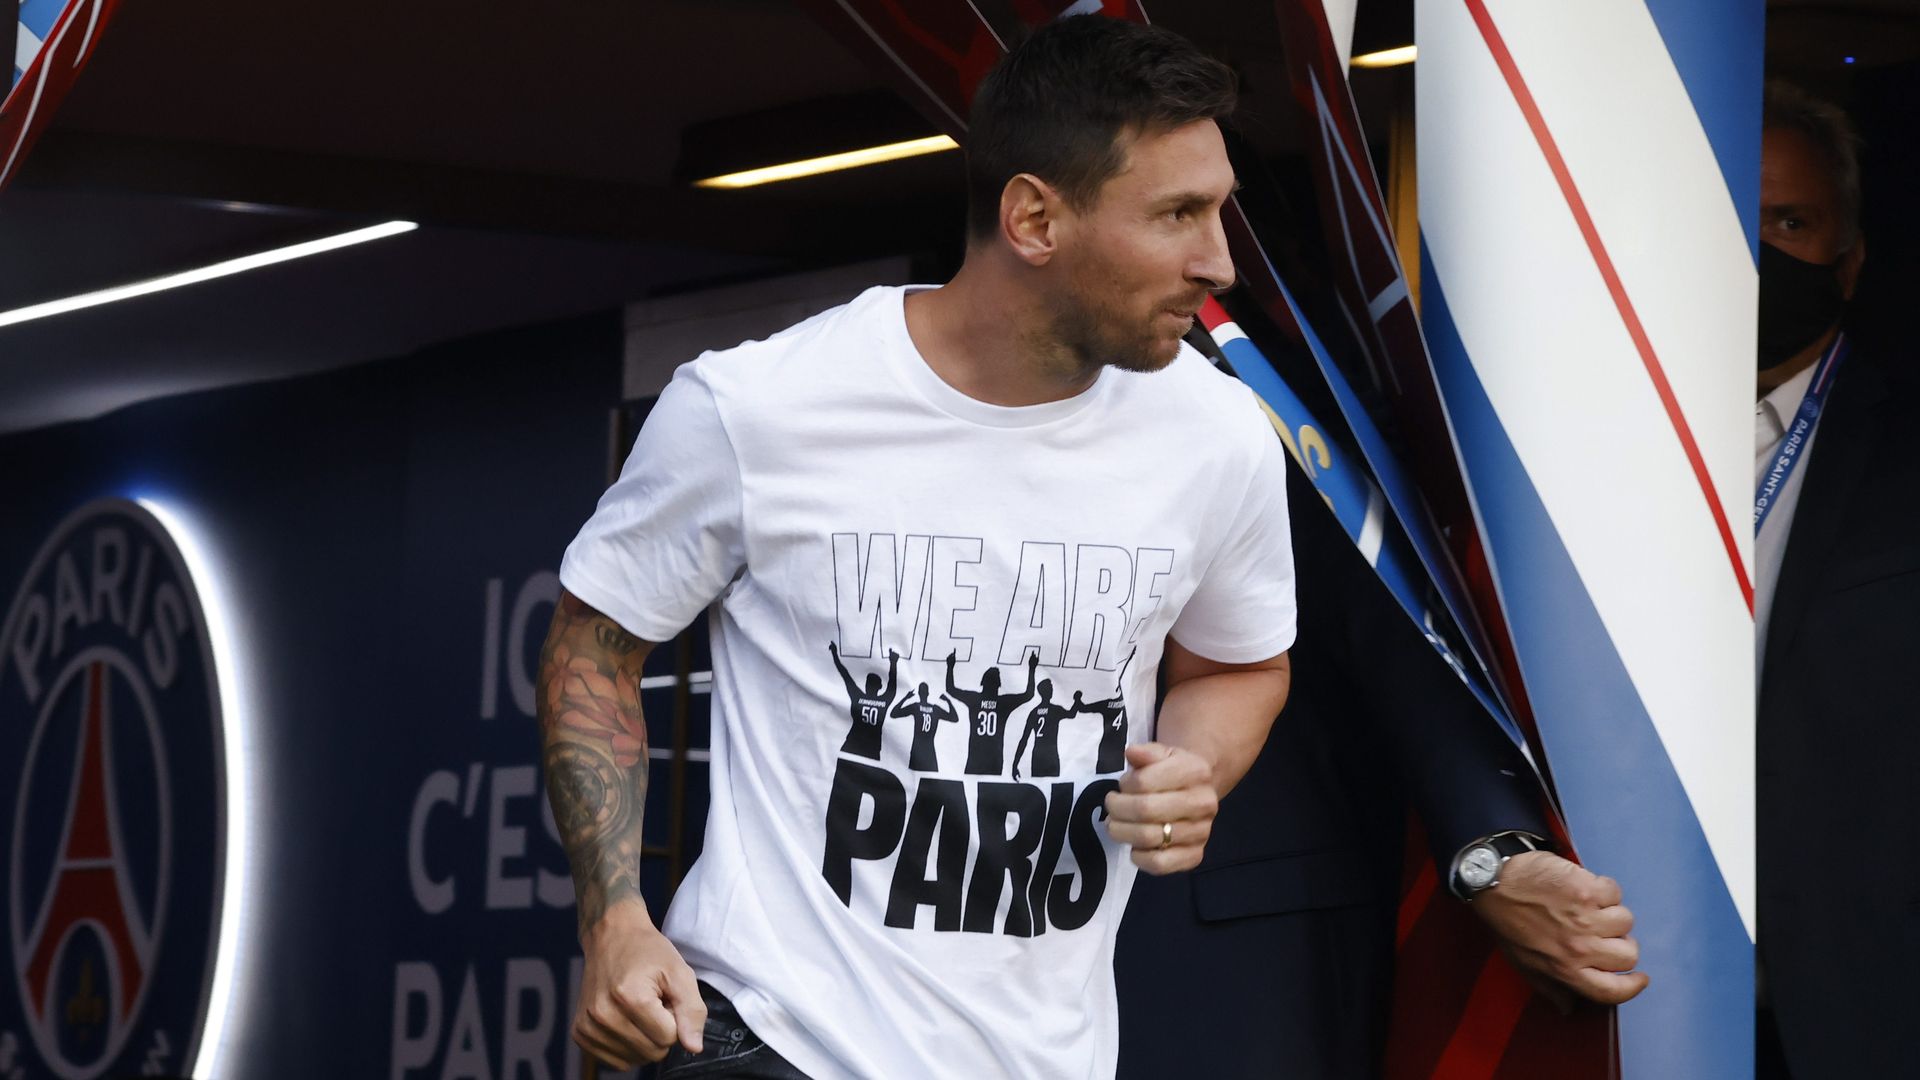 Officiel : Accord conclu PSG-Messi